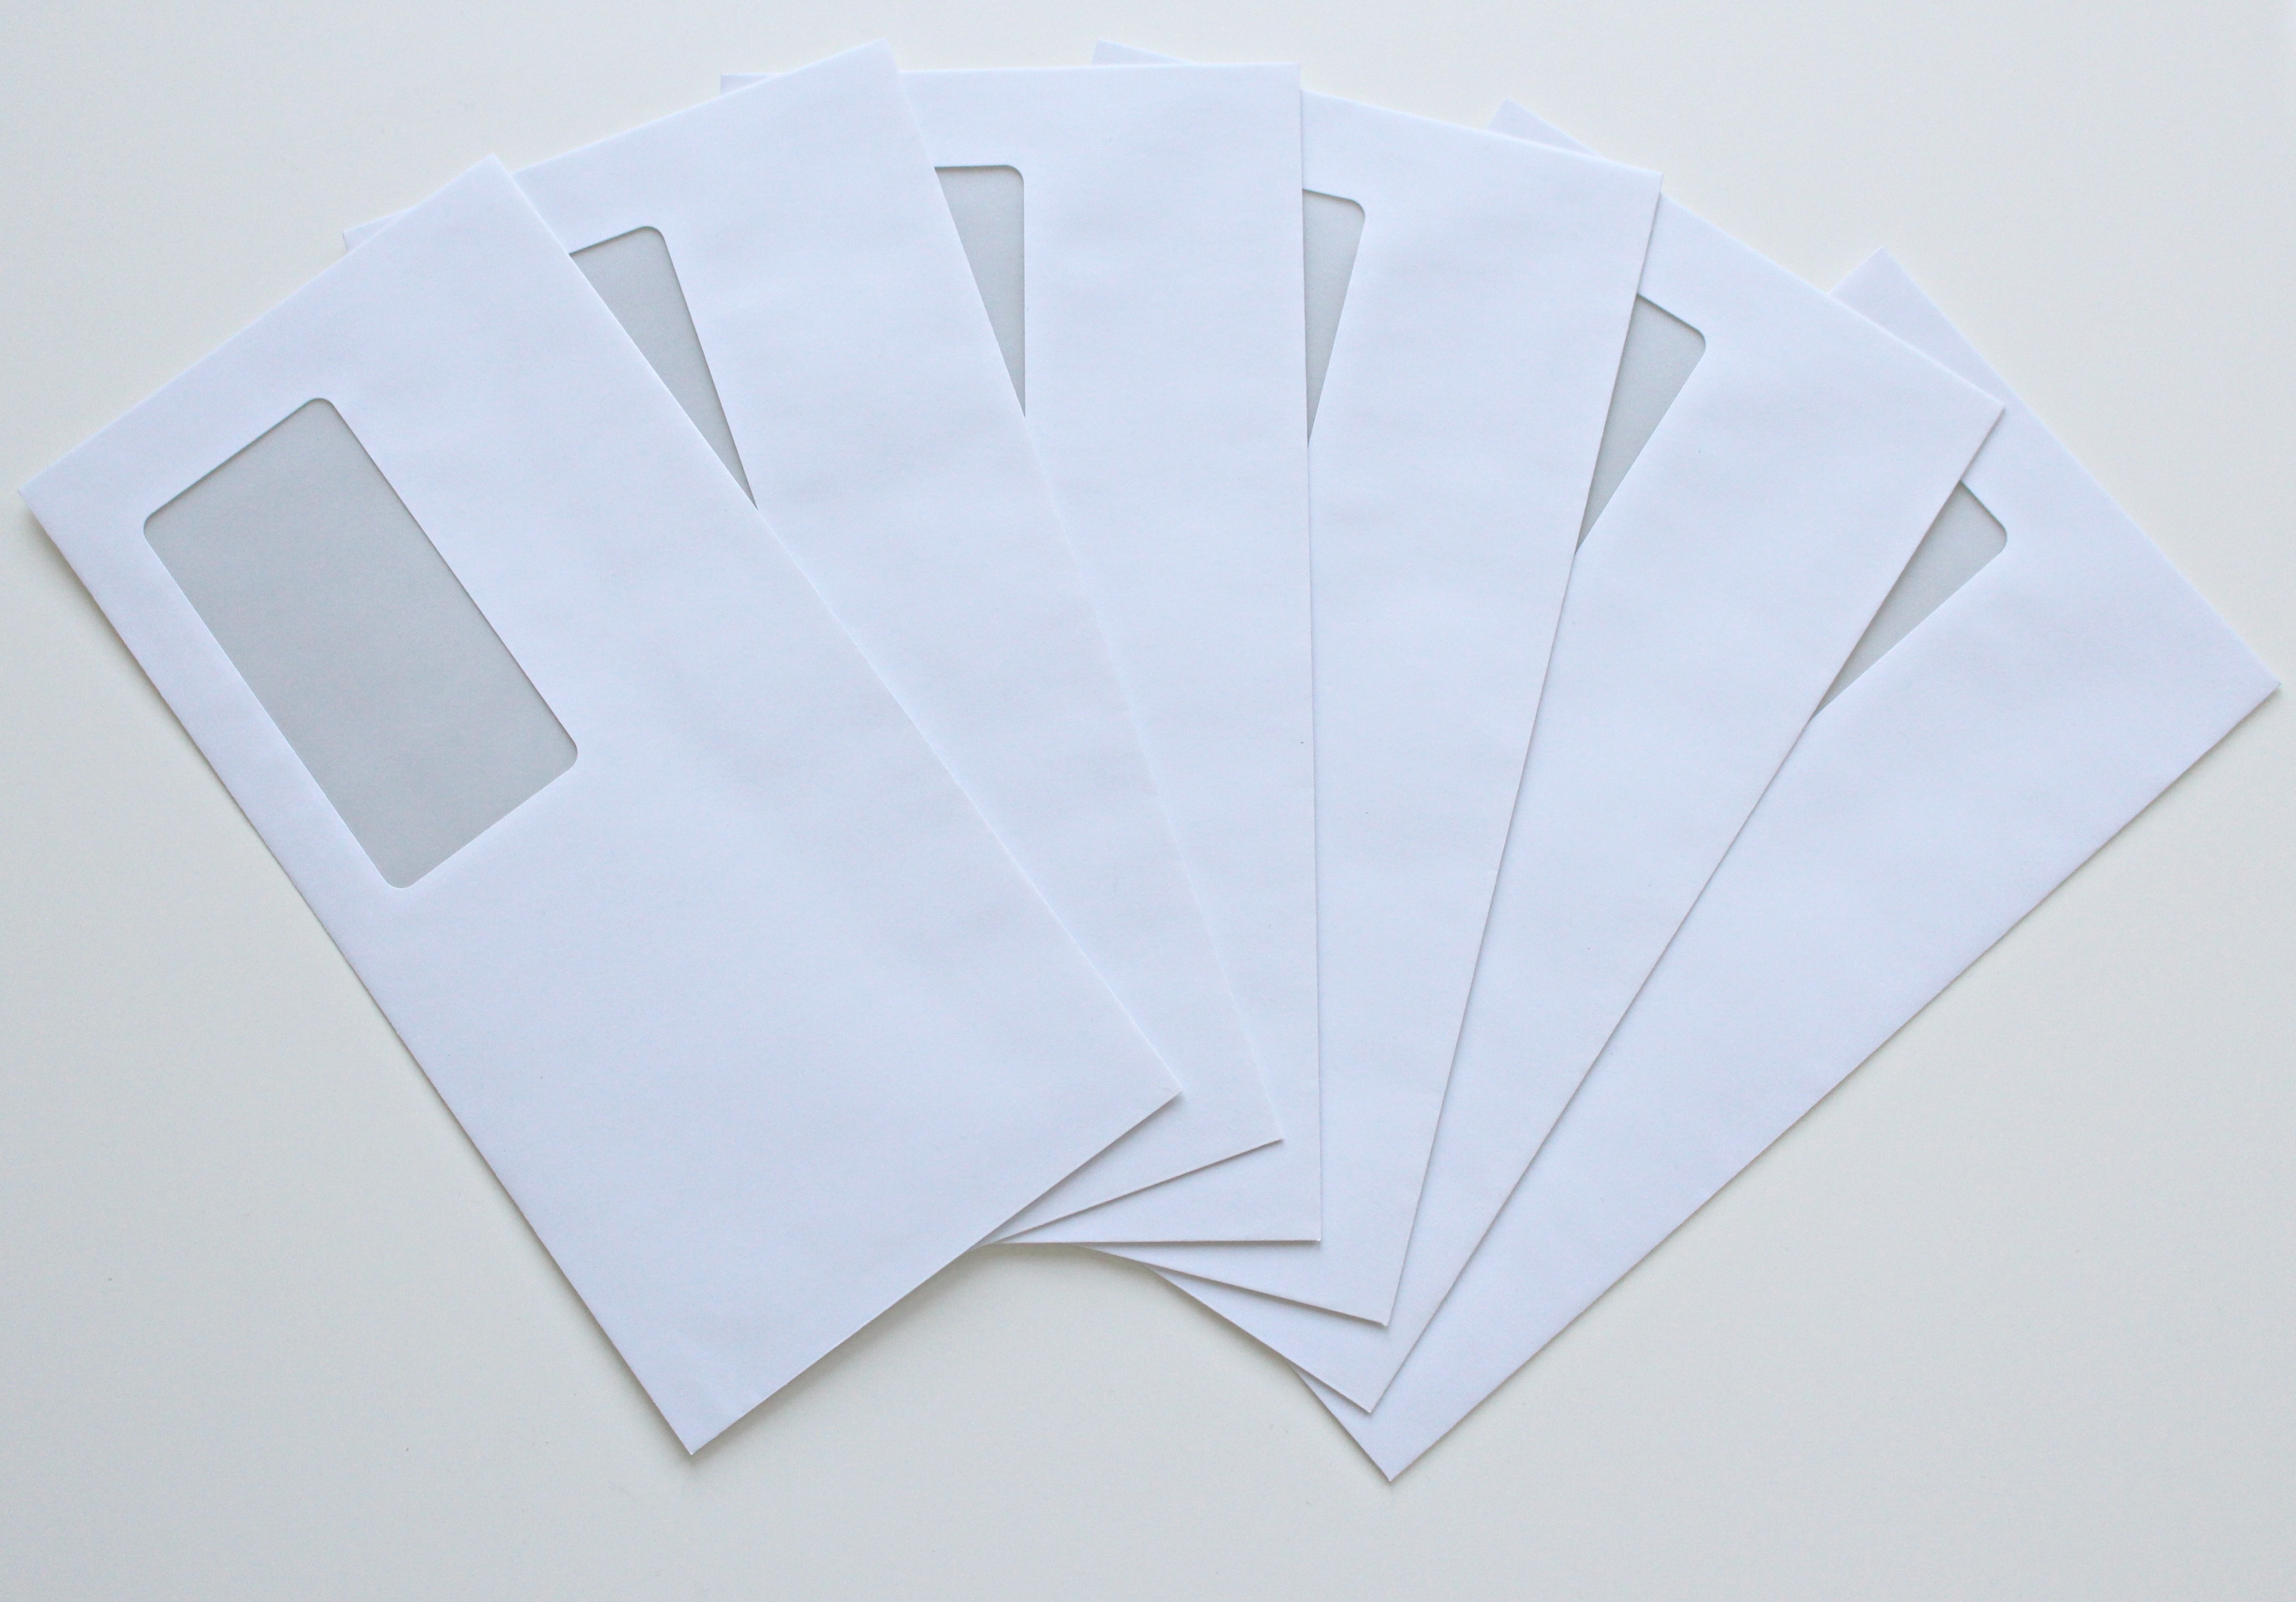 Photograph of plain white empty envelopes